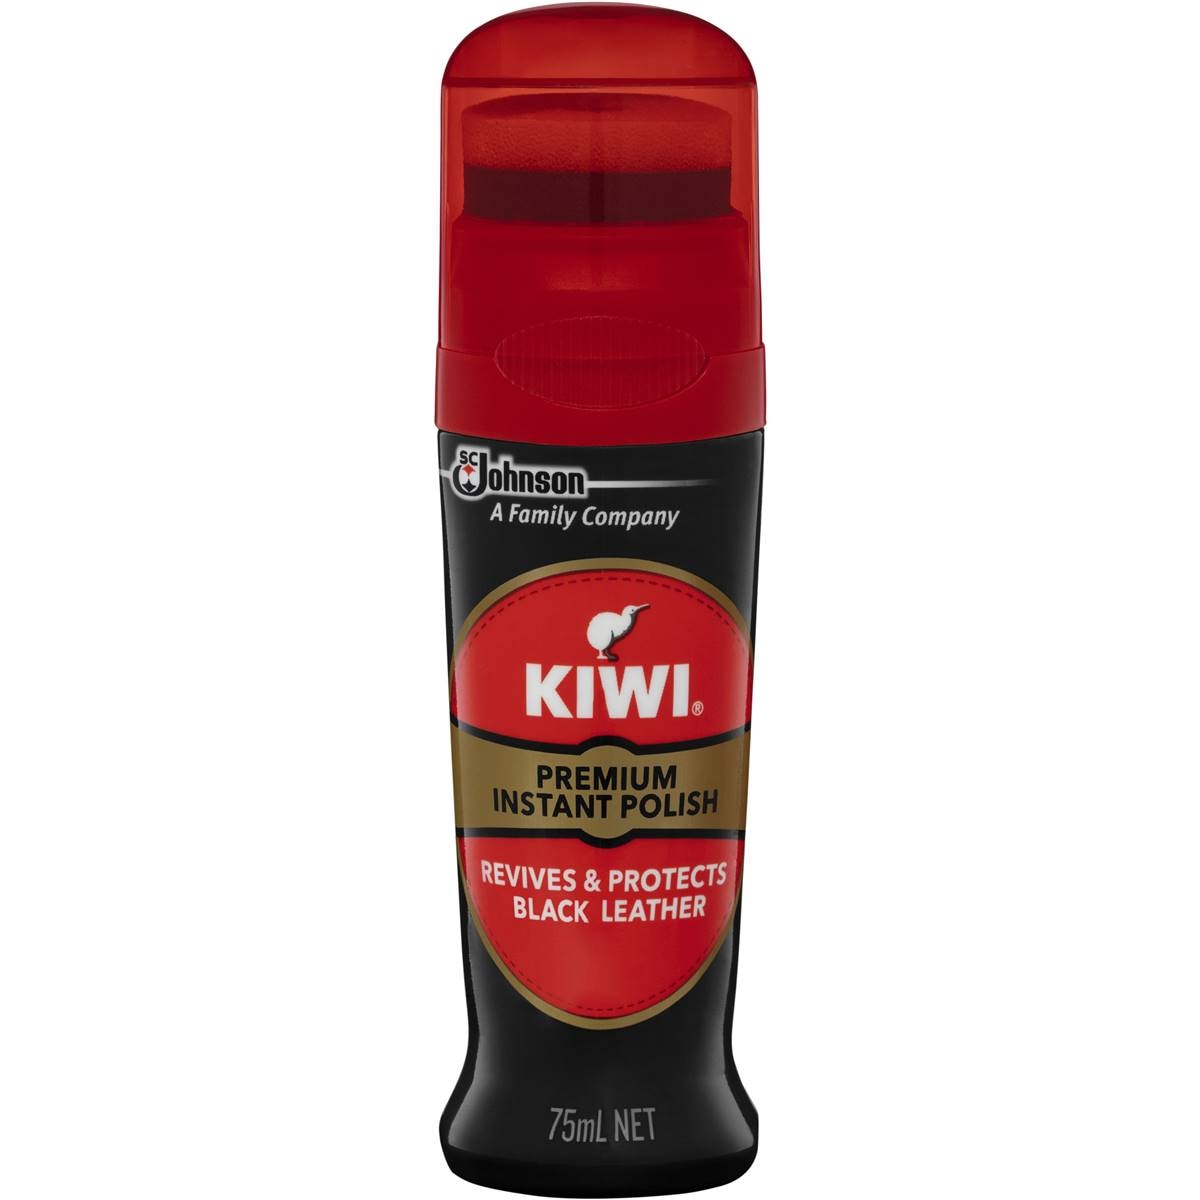 Kiwi Premium Instant Polish Black Leather 75ml